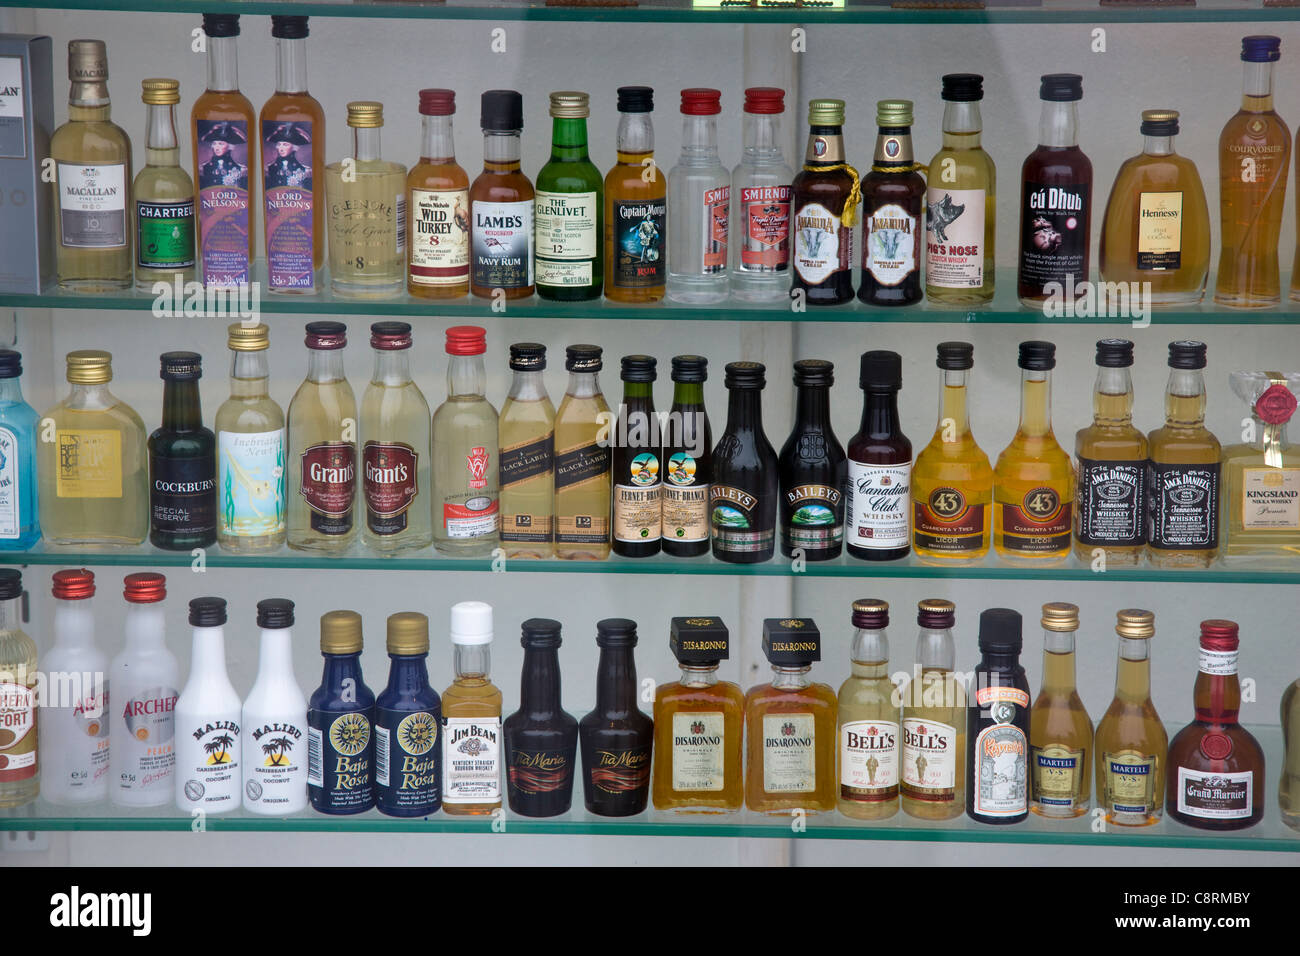 Miniature bottles of whisky, brandy, vodka, cognac, gin